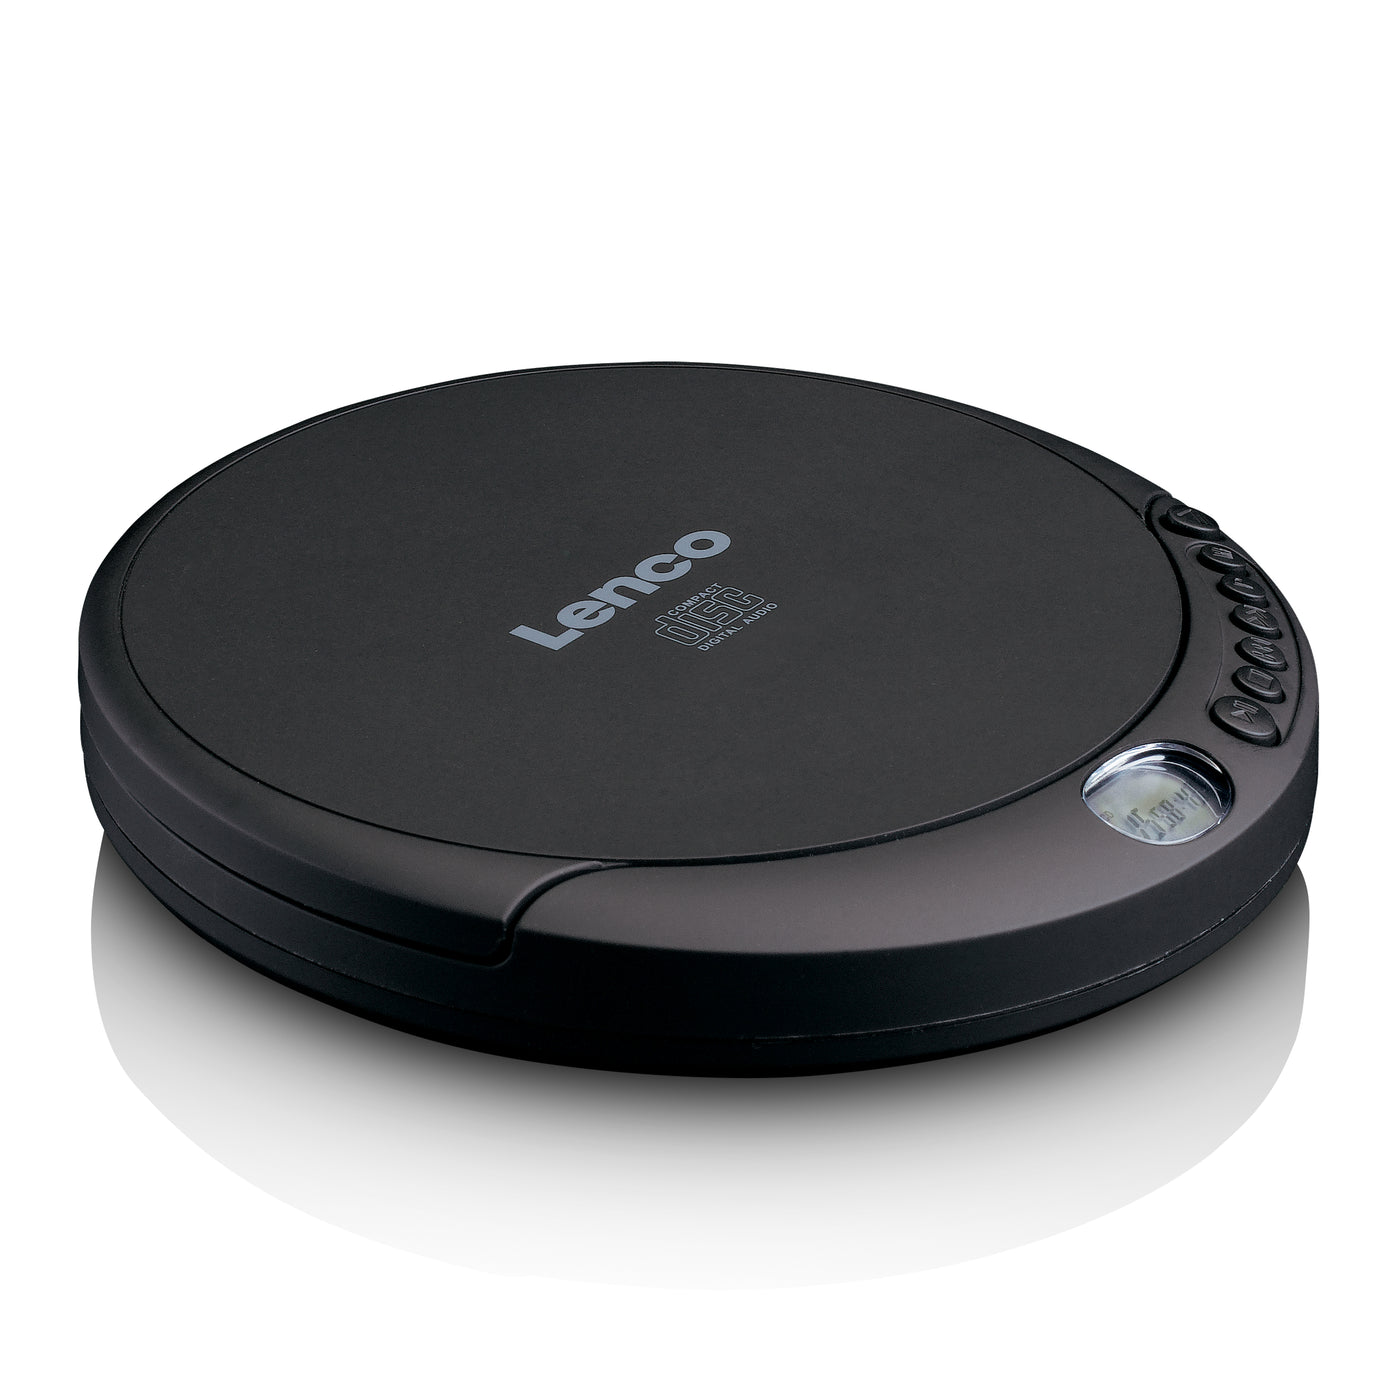 LENCO CD-010 - -Catalog Lenco charging with player Black Portable - – function CD